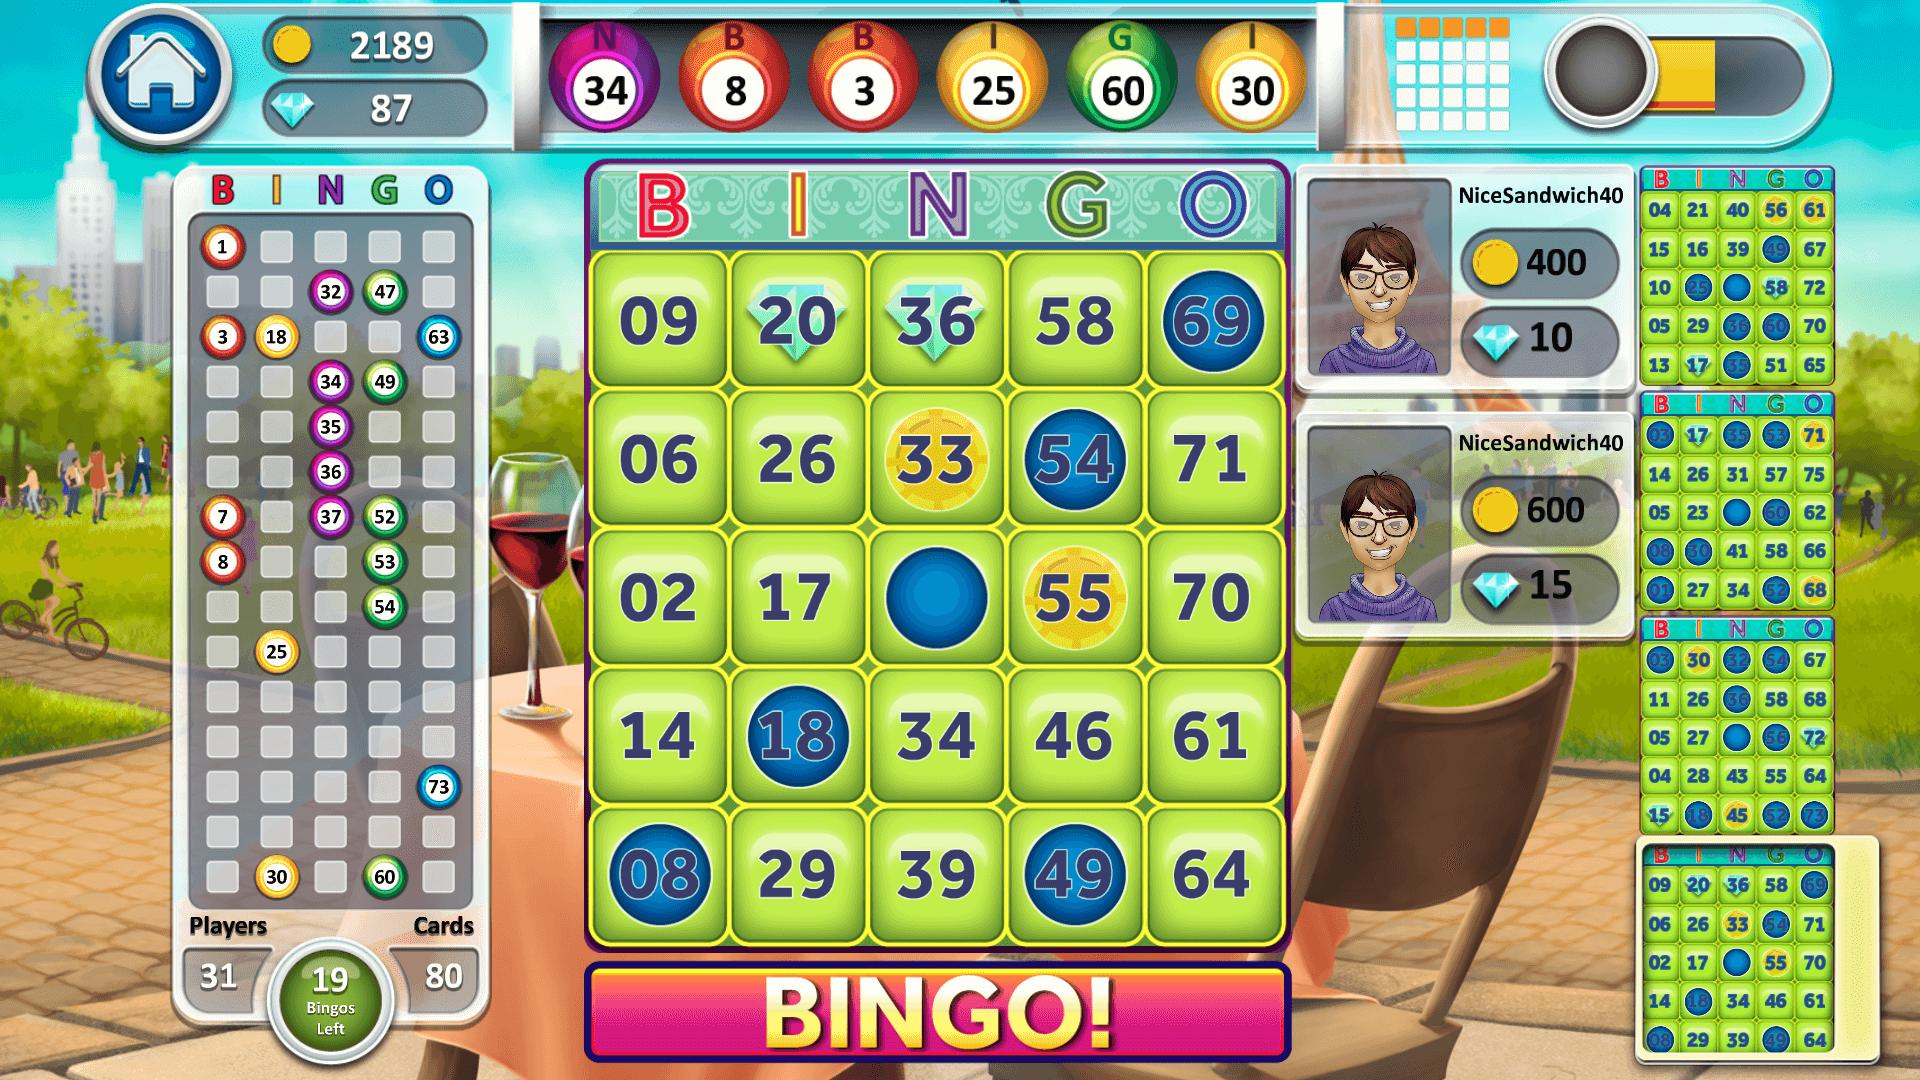 Bingo variants and rules